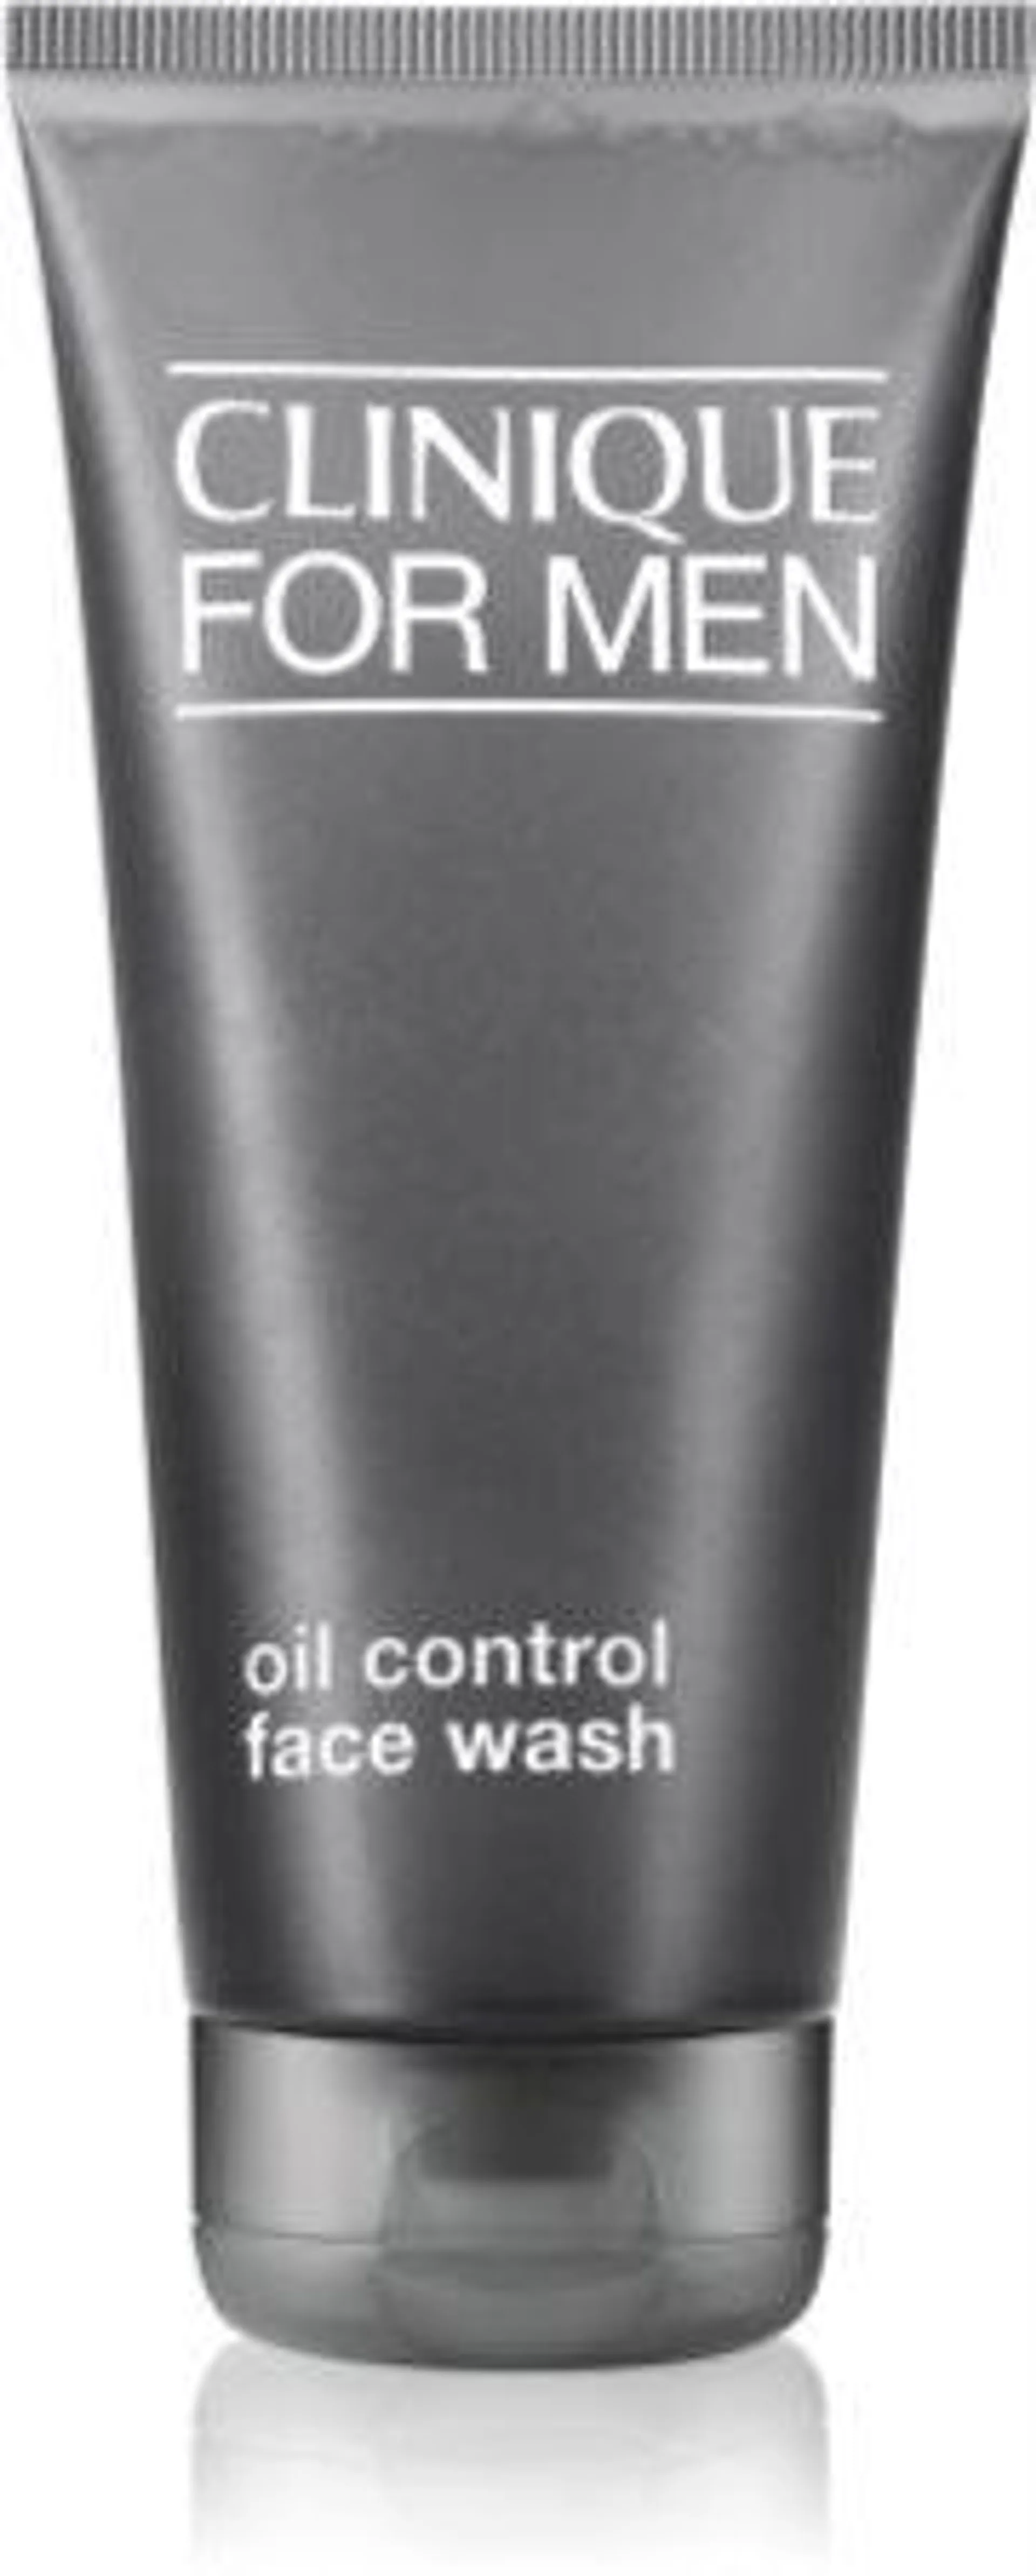 For Men™ Oil Control Face Wash